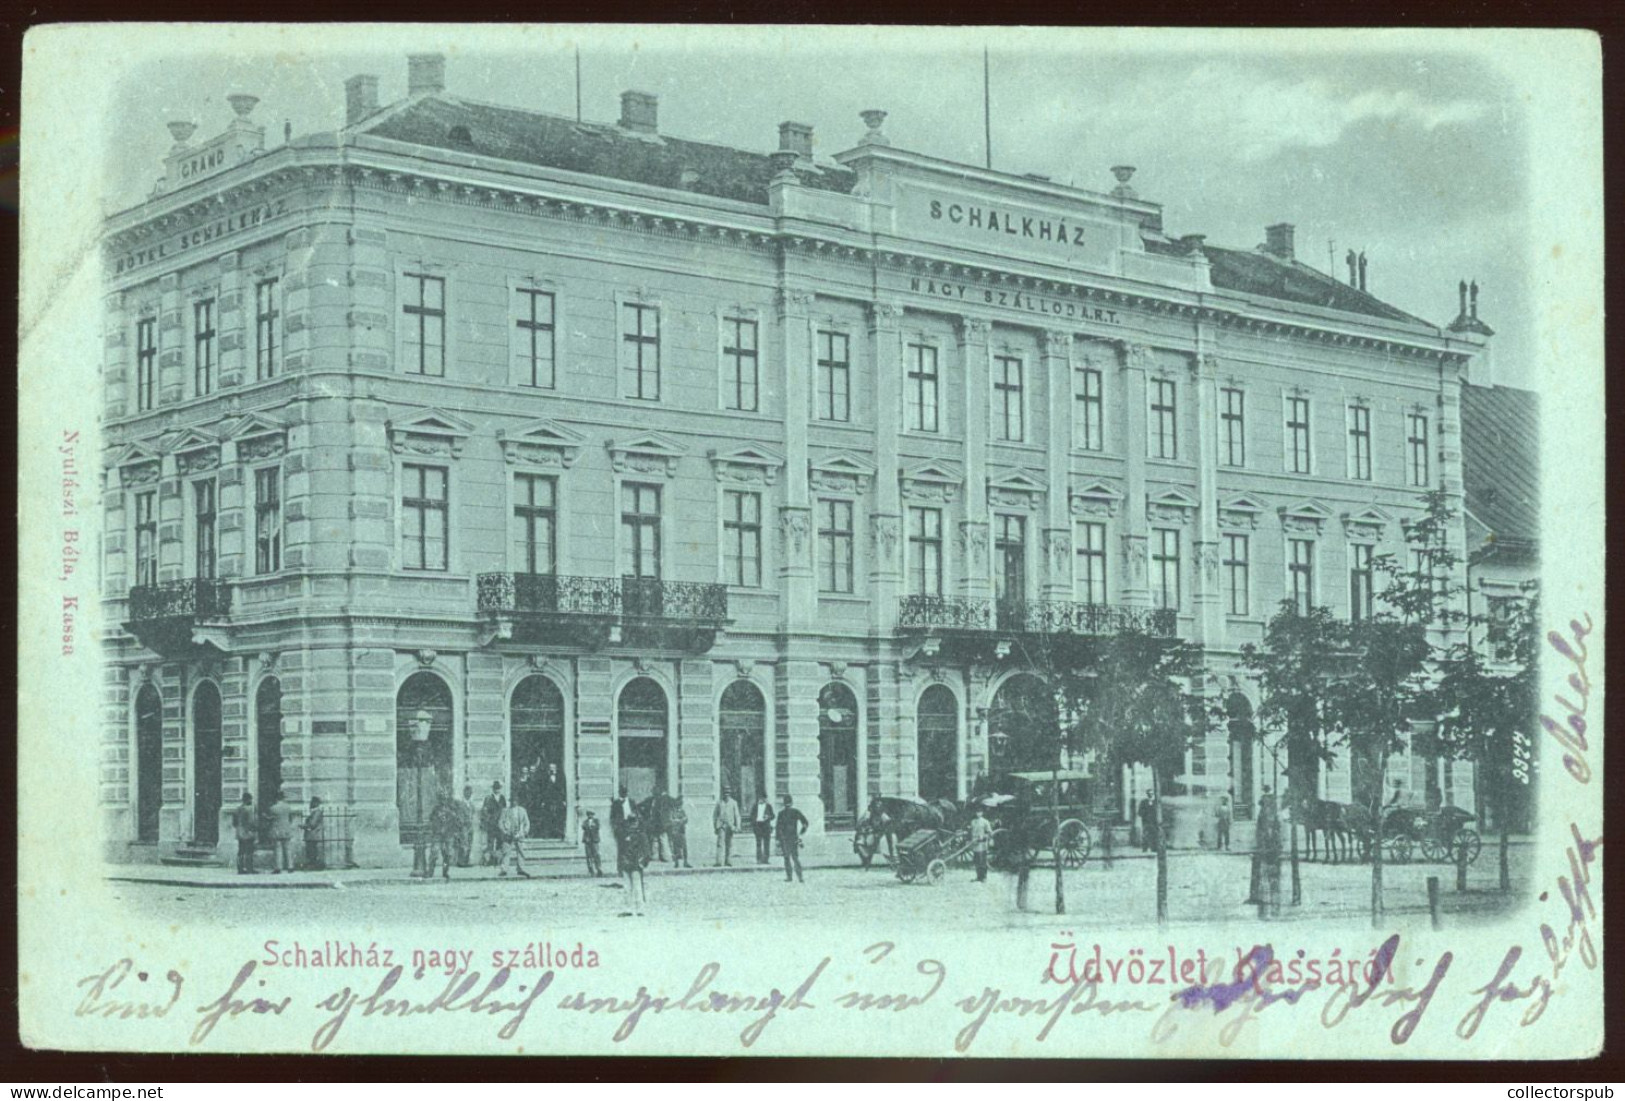 HUNGARY KASSA 1900. Old Postcard - Hongrie